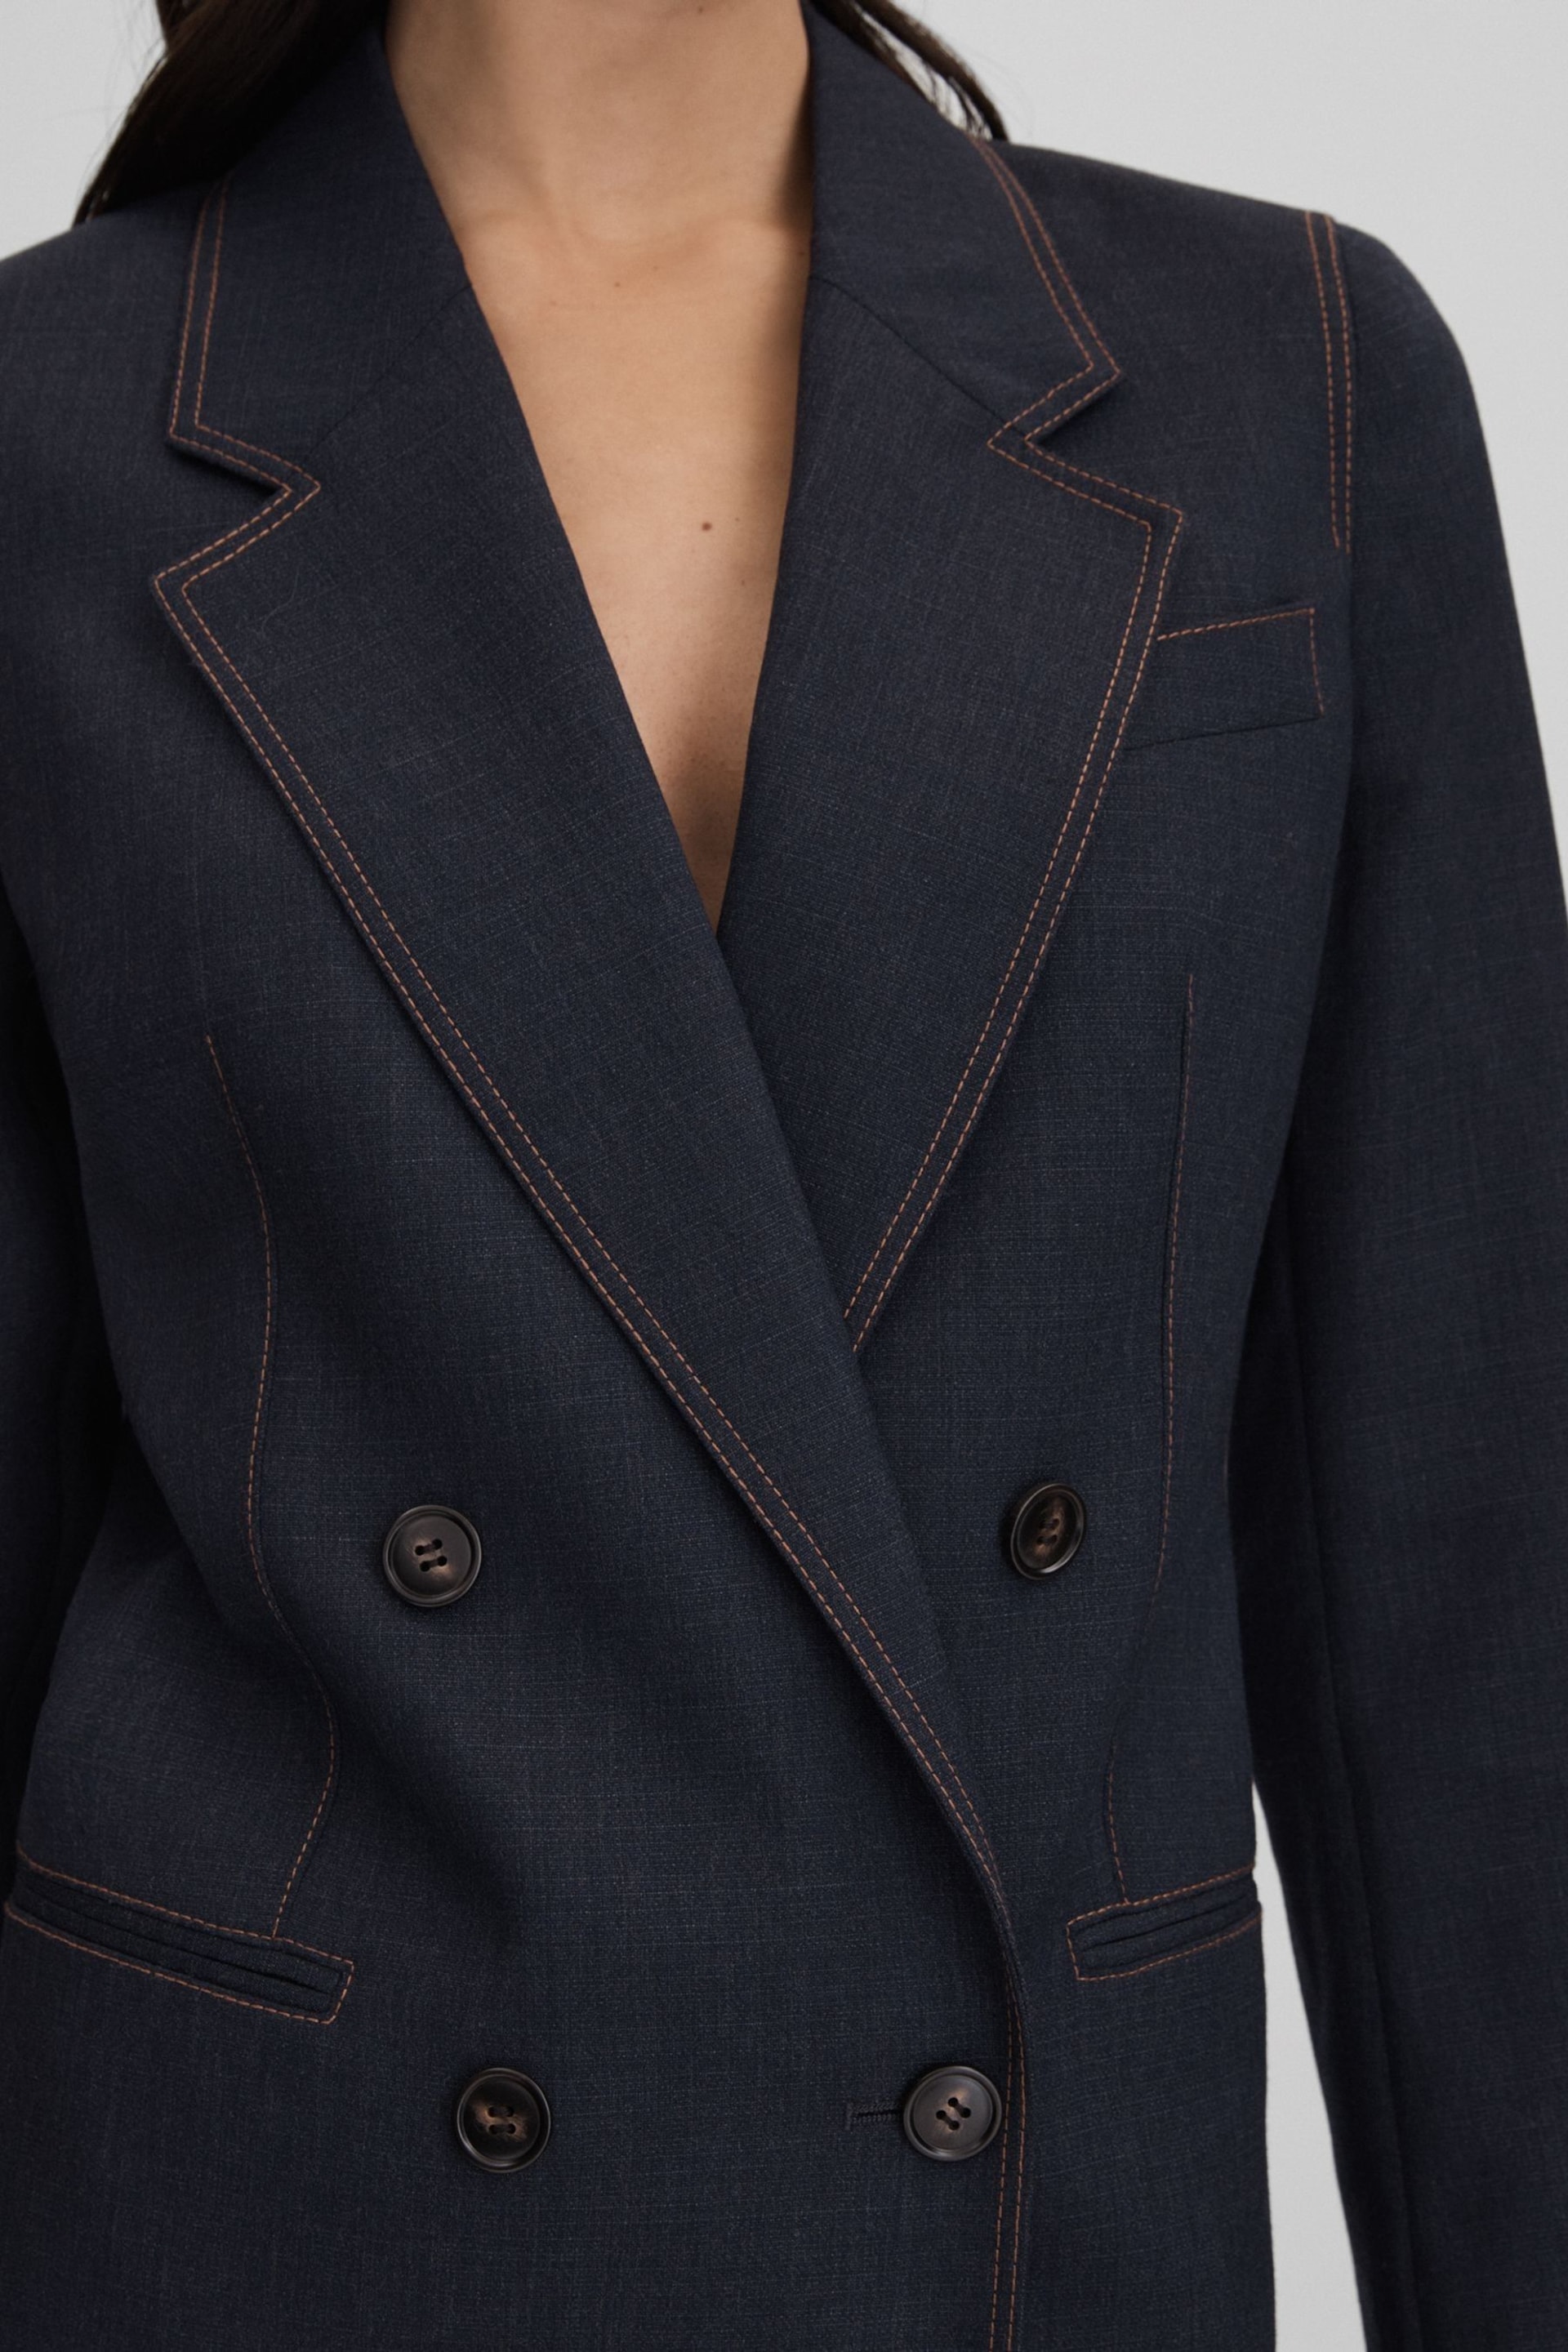 Reiss Navy Raven Wool Blend Denim Look Suit Blazer - Image 4 of 8